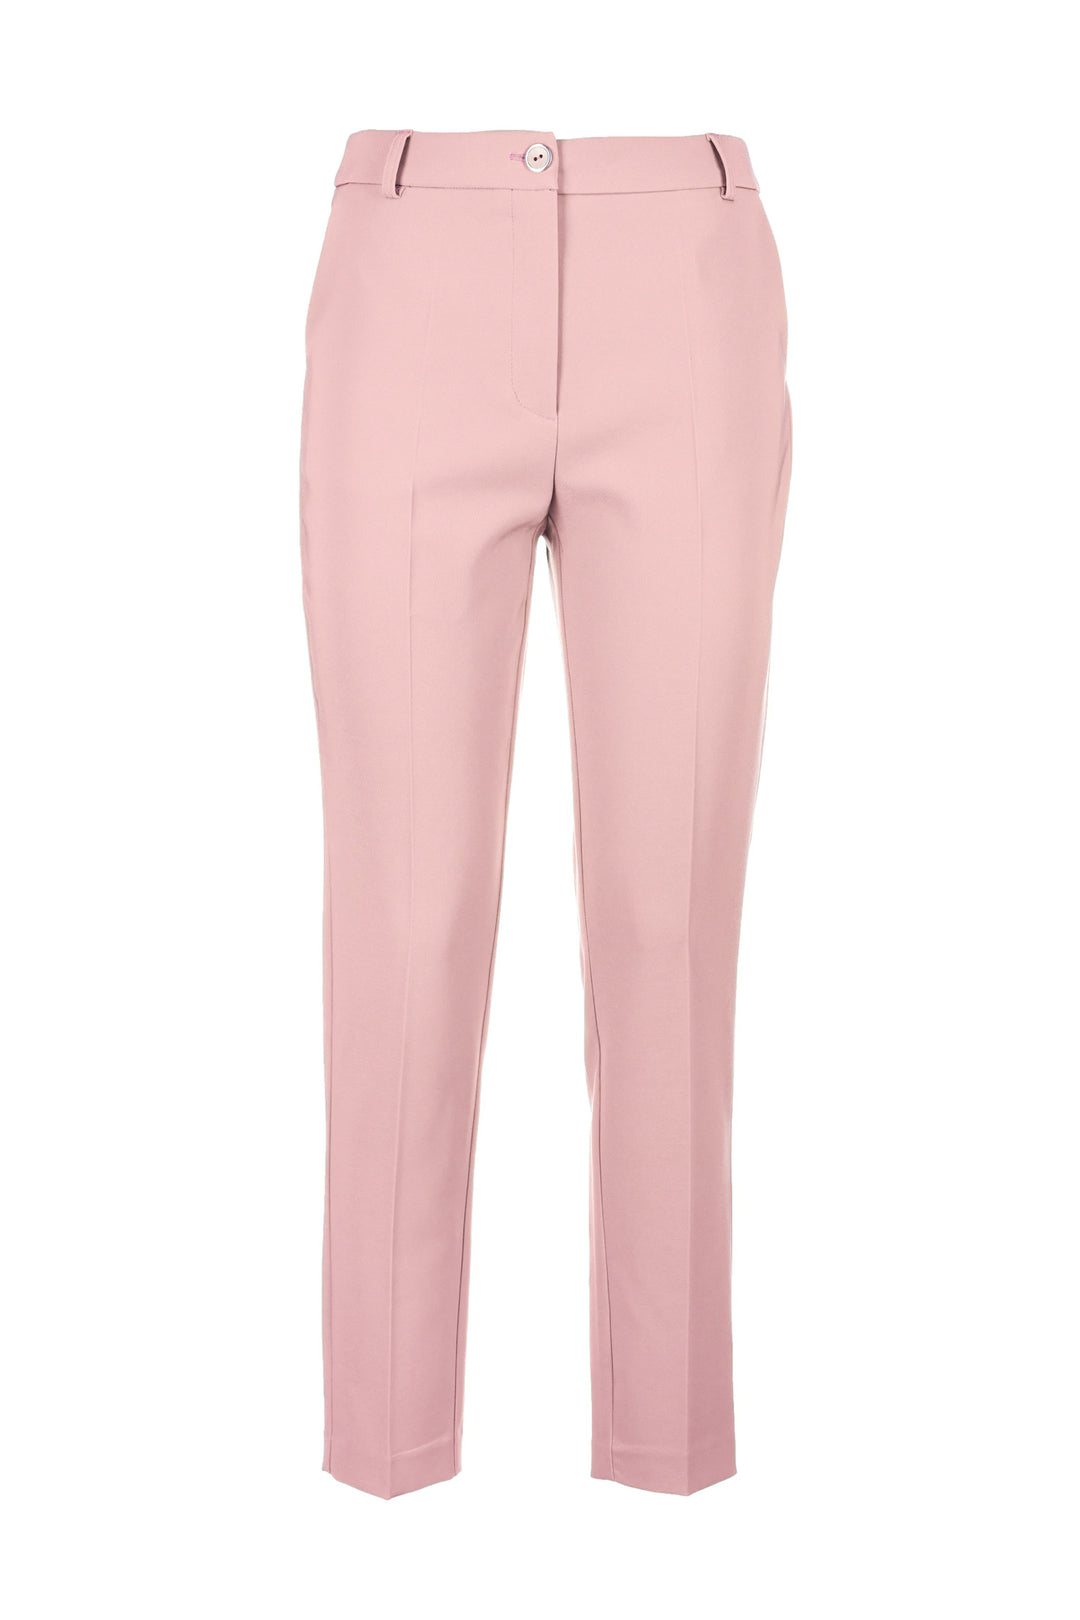 FRACOMINA Pantaloni slim chino rosa polvere in tessuto tecnico - Mancinelli 1954